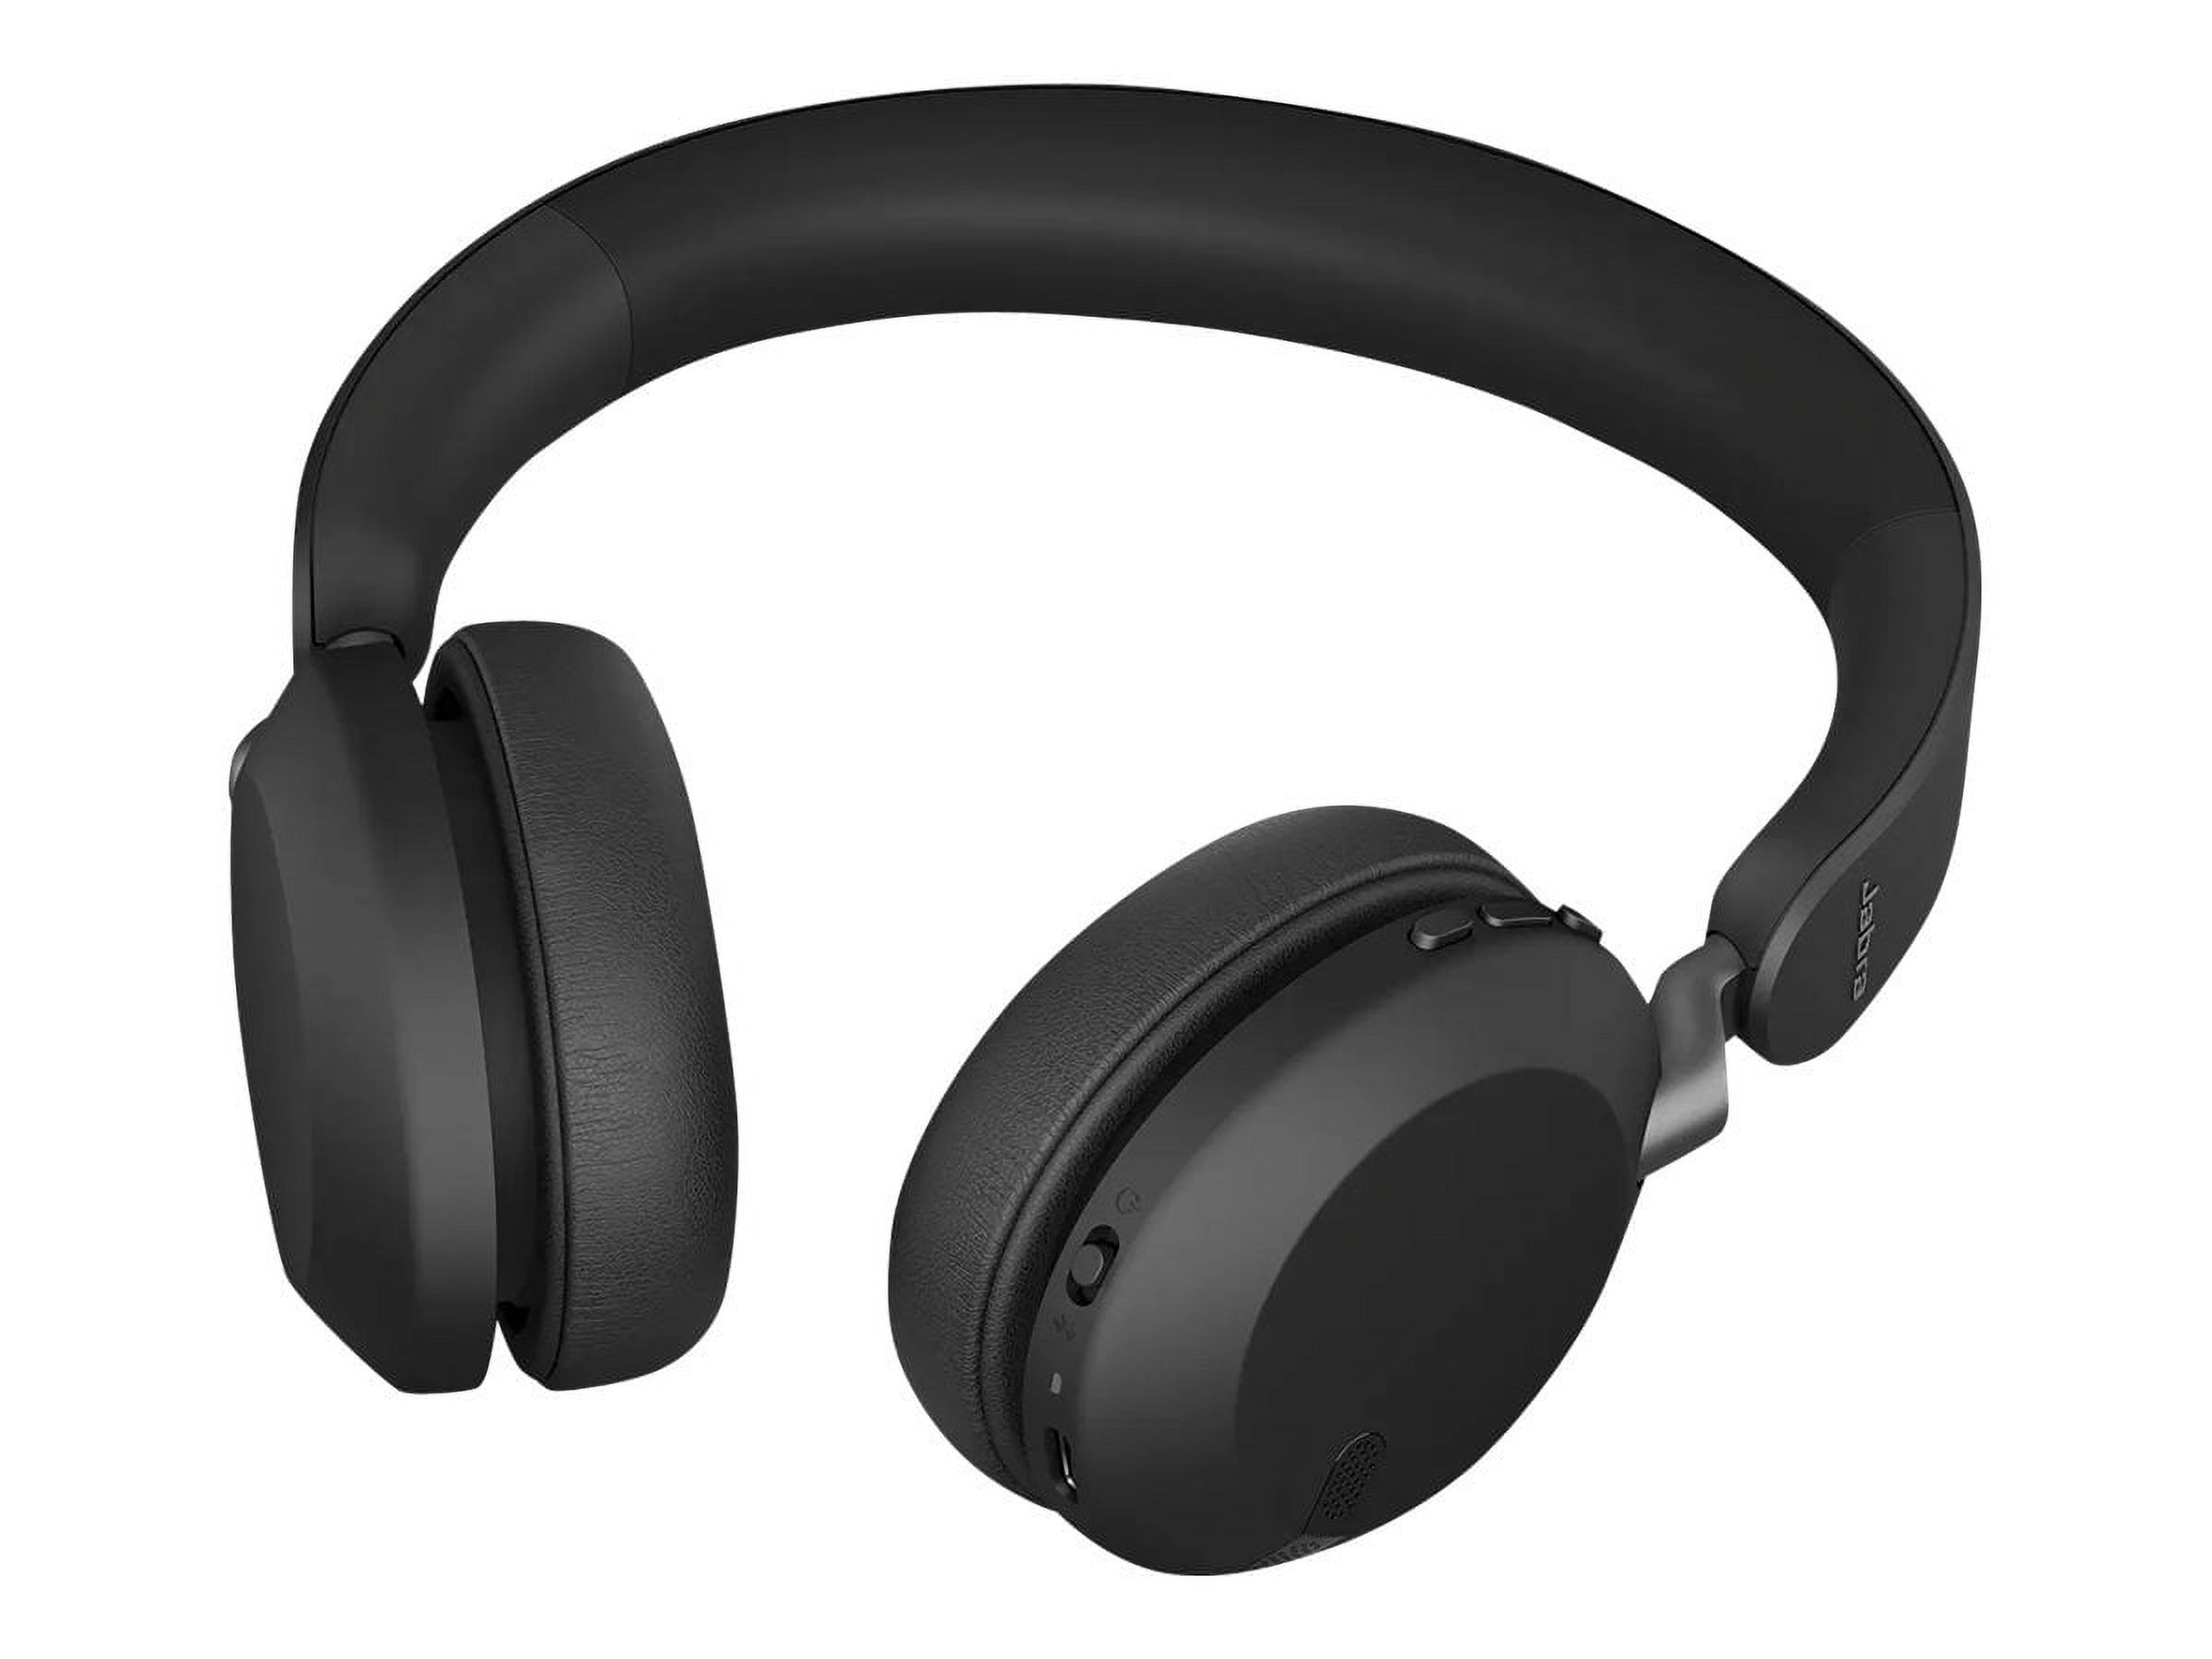 Jabra Elite 45h - Headphones with mic - on-ear - Bluetooth - wireless - titanium black - image 1 of 9